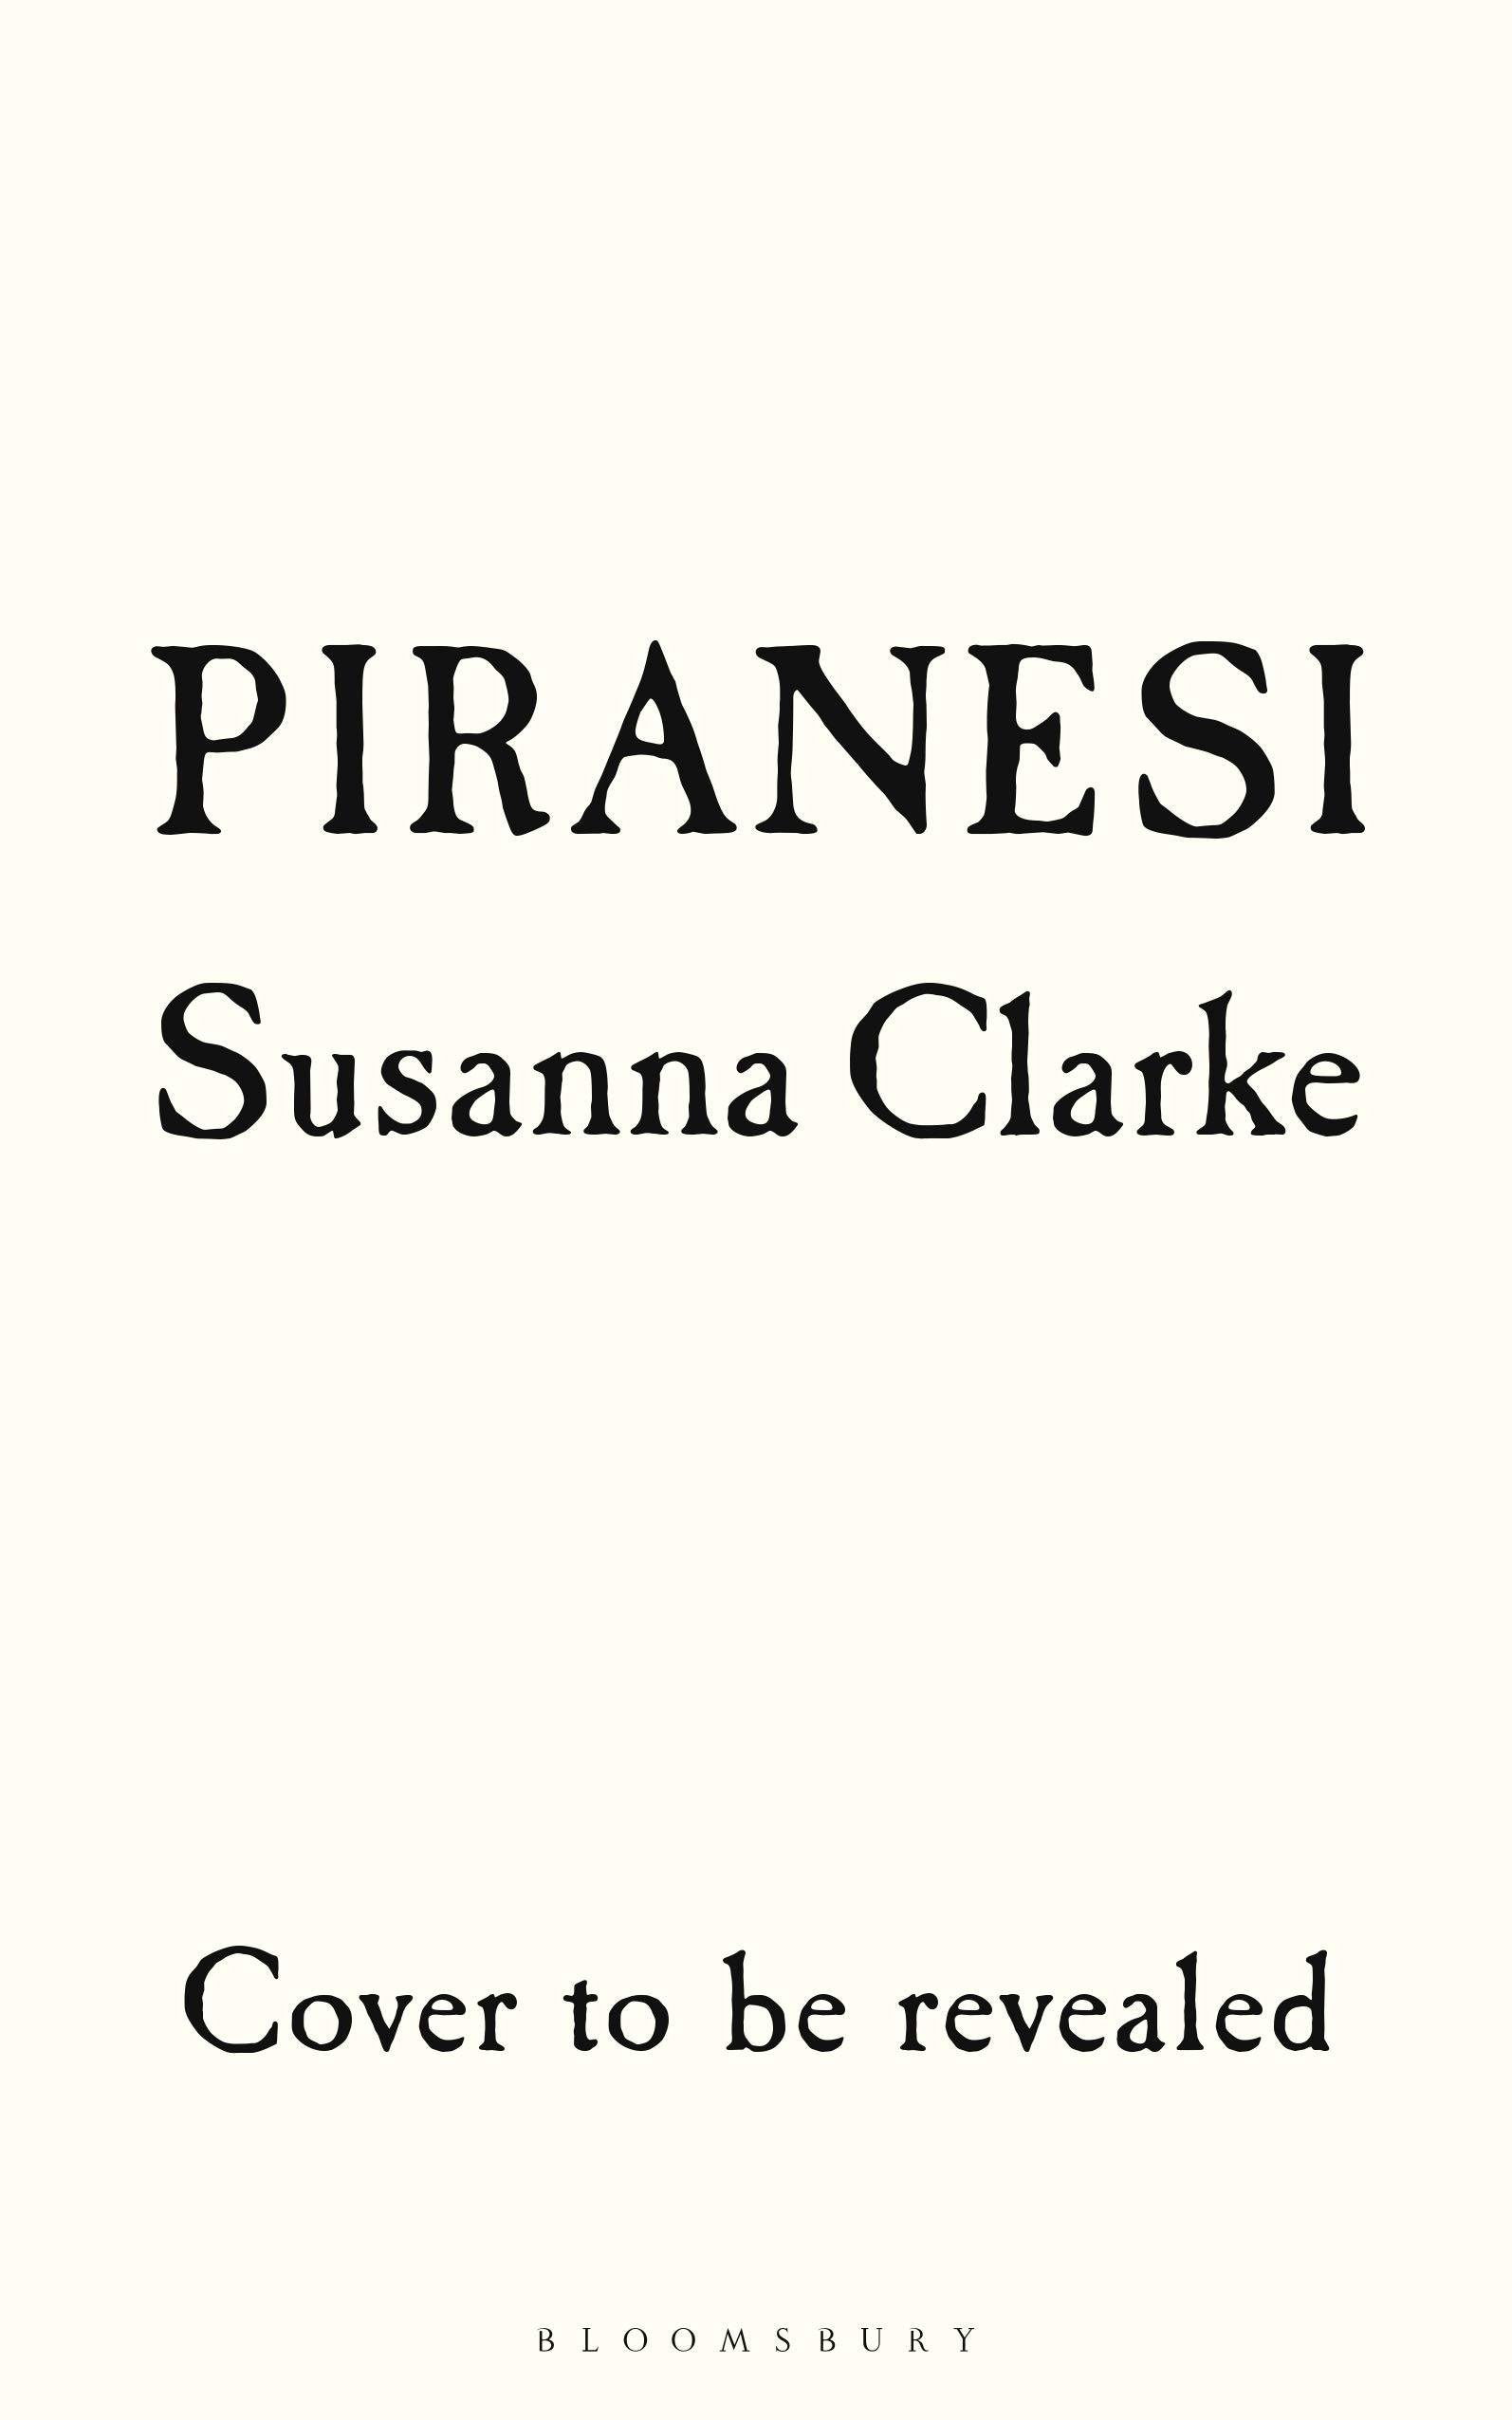 piranesi meaning book